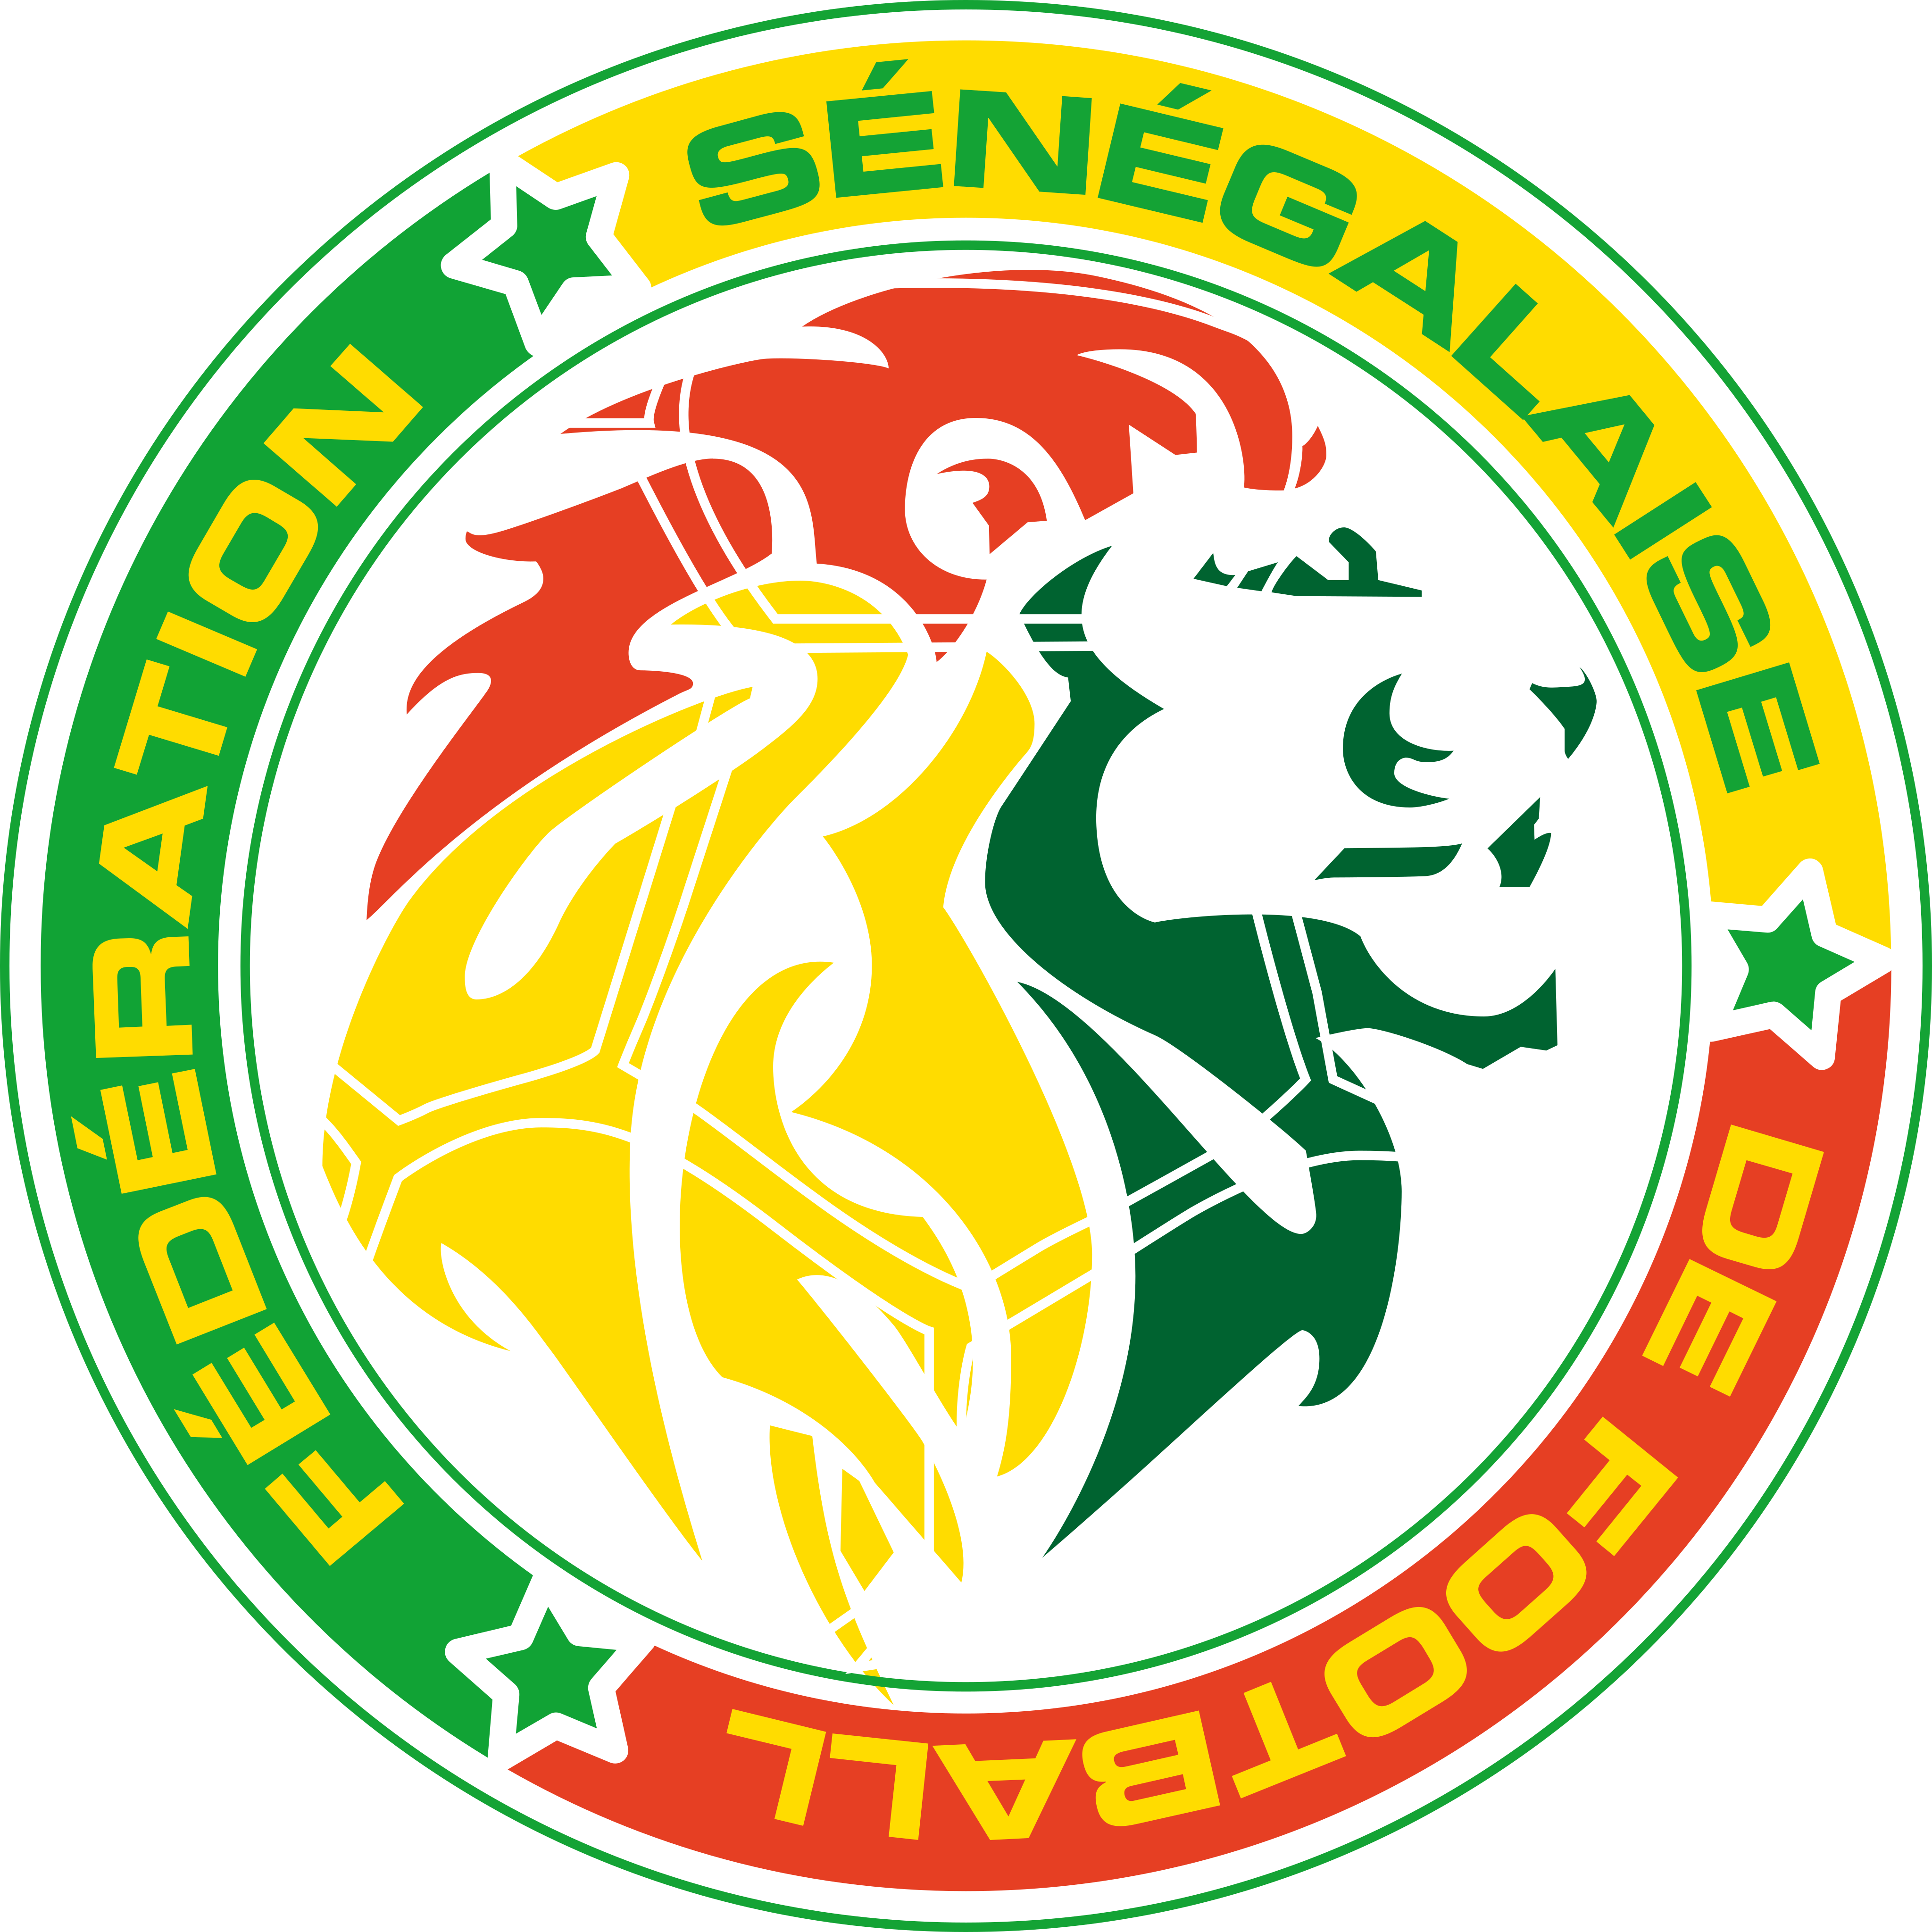 fsf senegal national football team logo - FSF Logo - Senegal National Football Team Logo